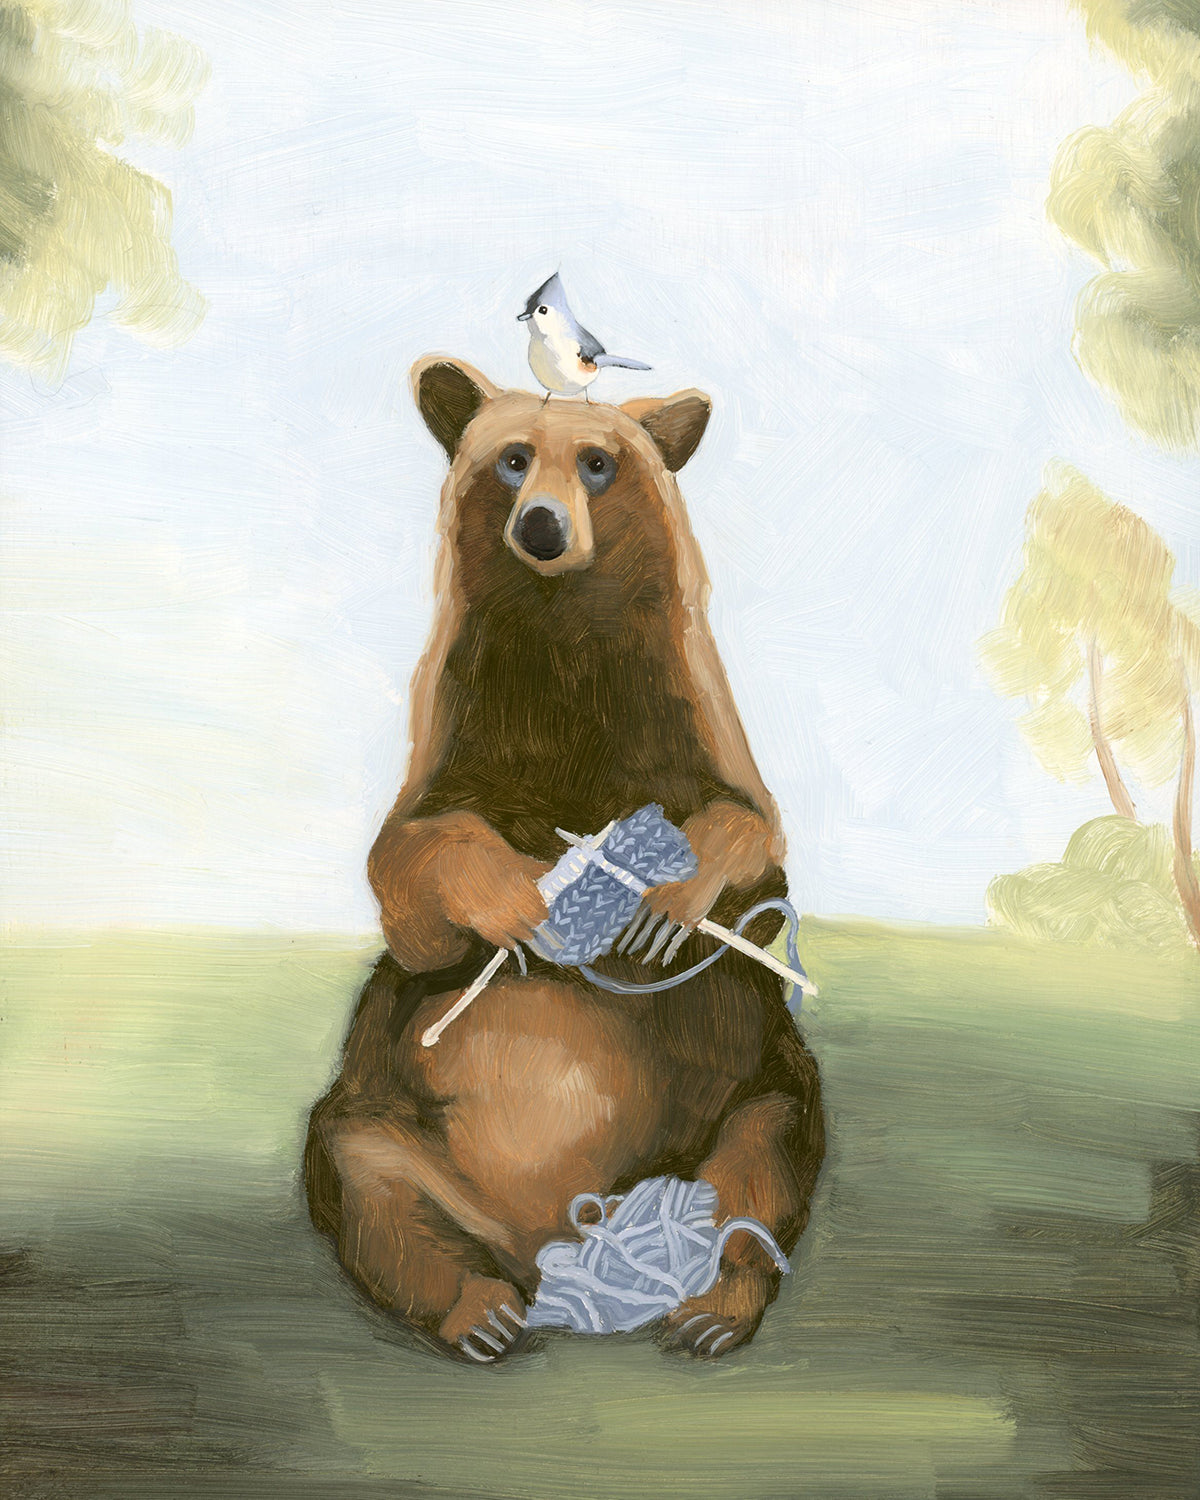 Bear Knitting - 8x10 original oil painting